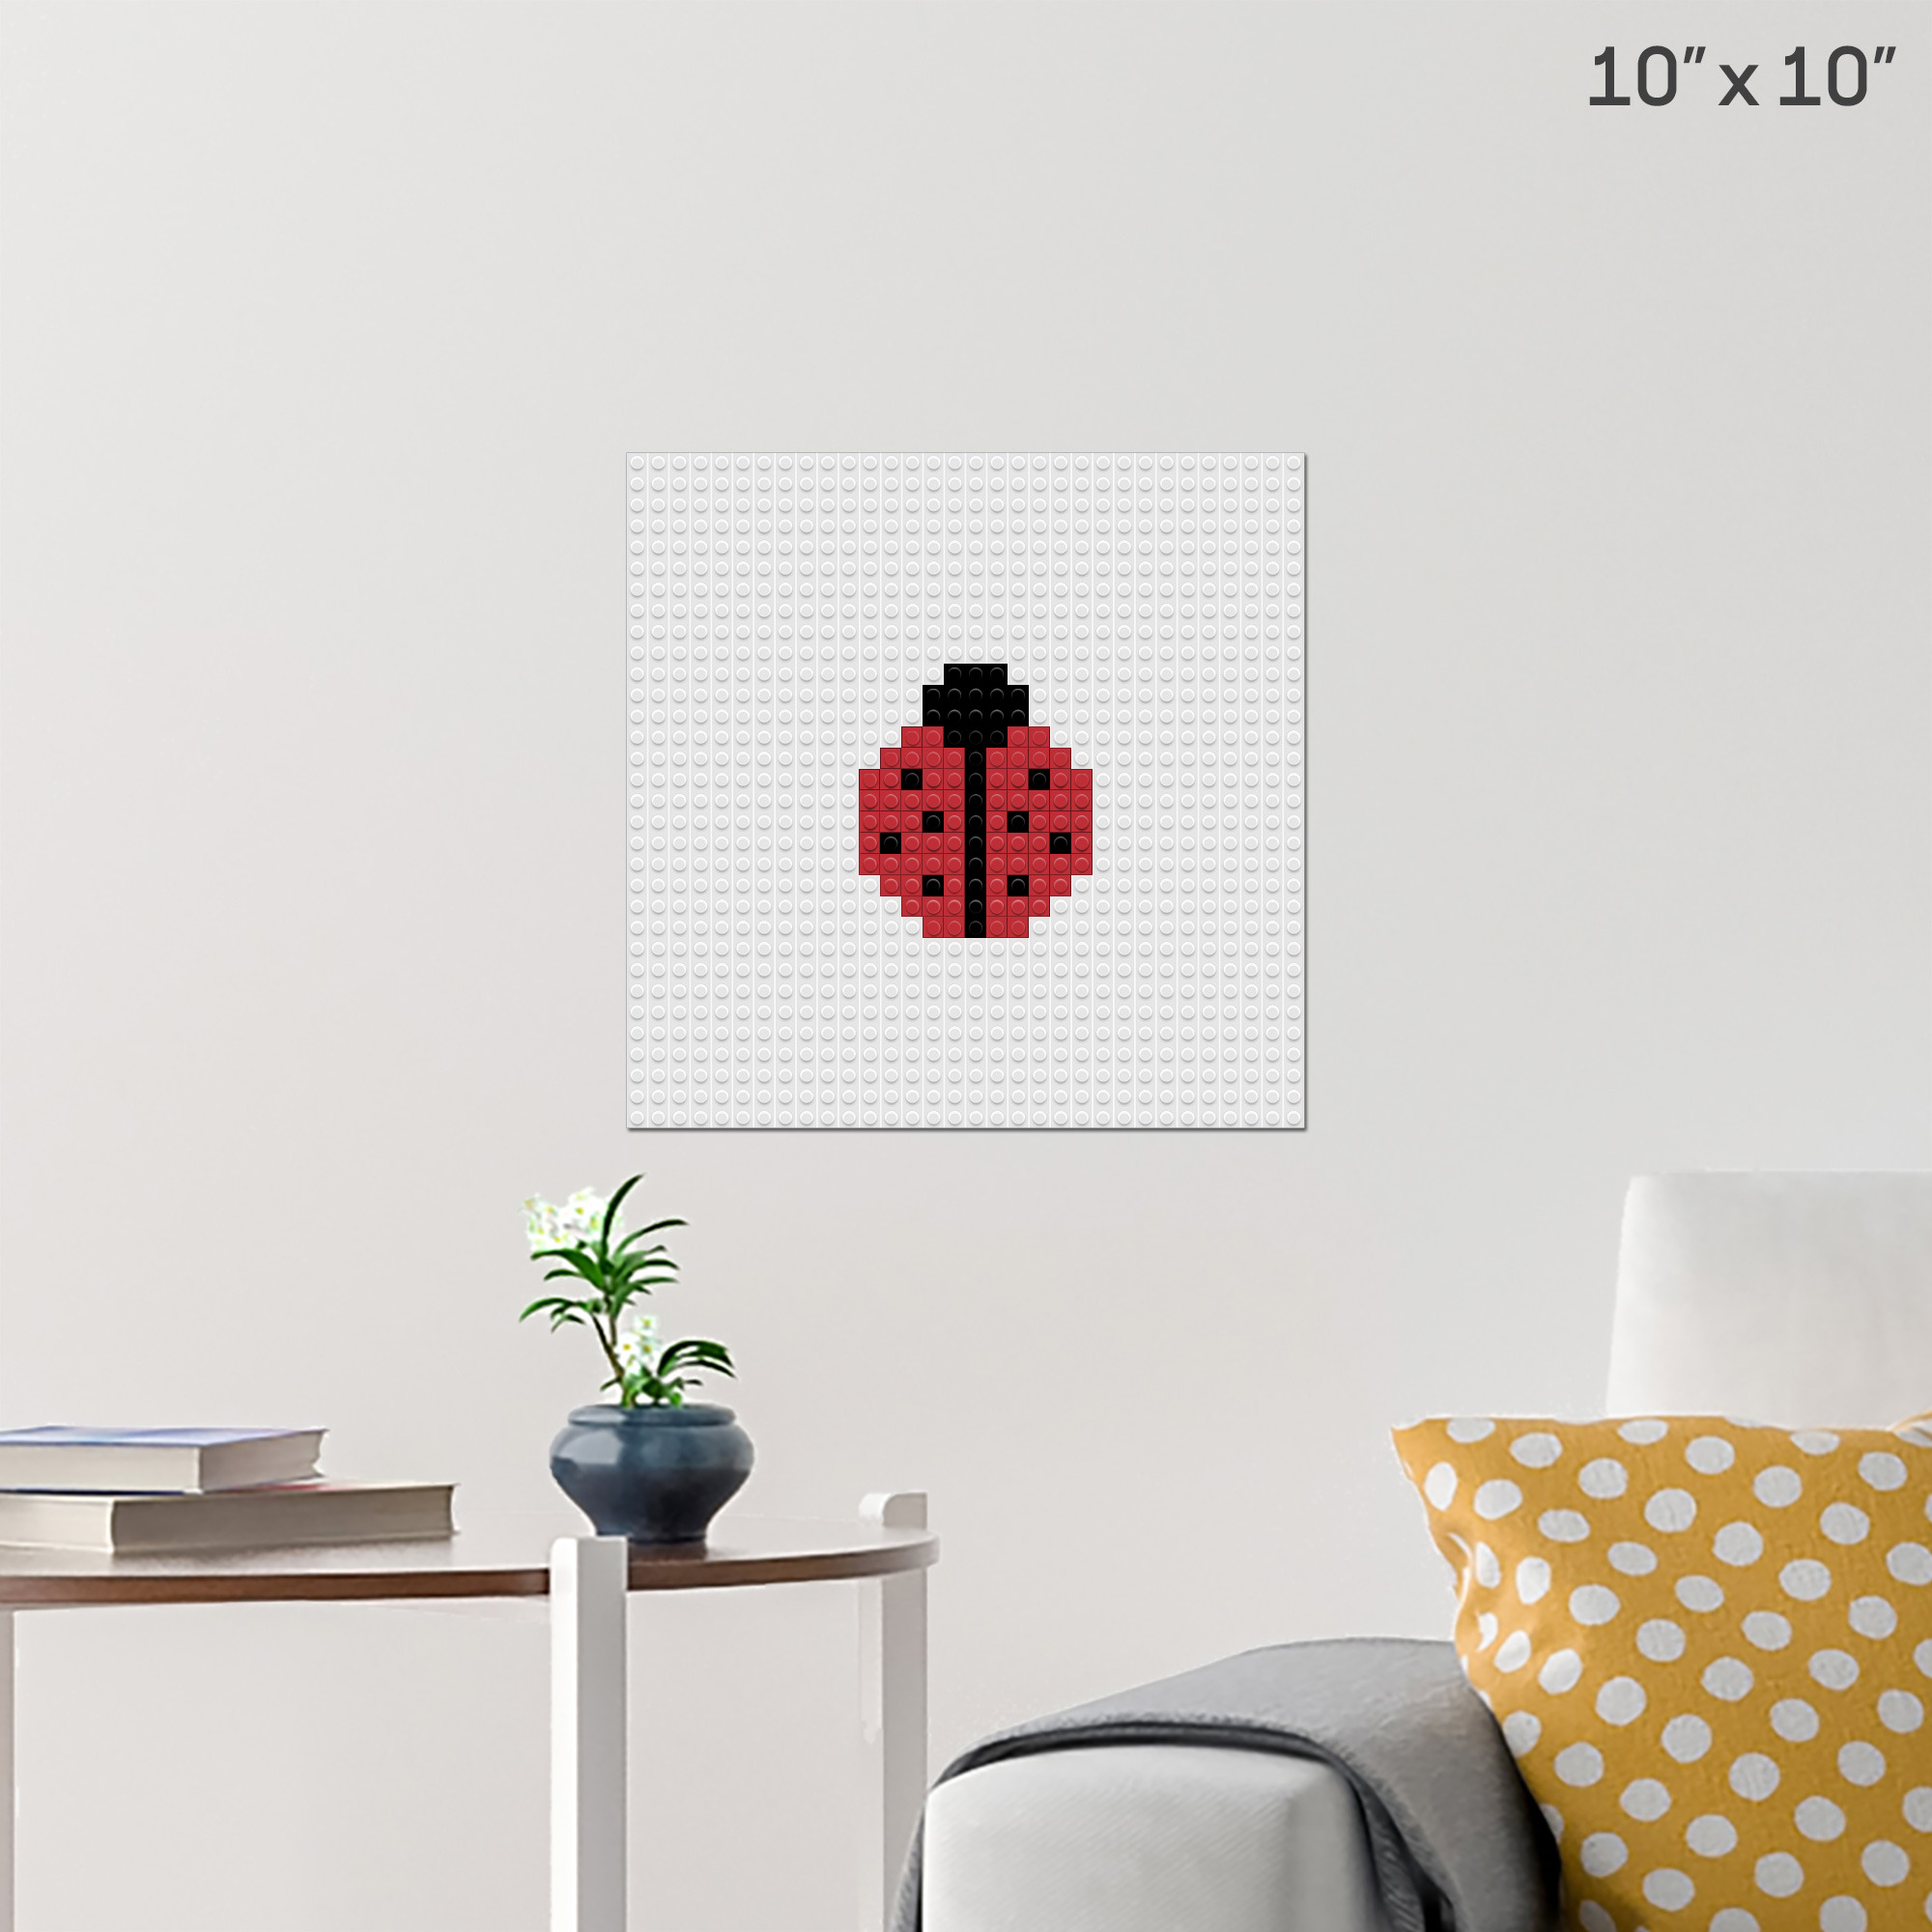 Ladybug-Torre Eiffel// Pixel art by Conpixel on DeviantArt